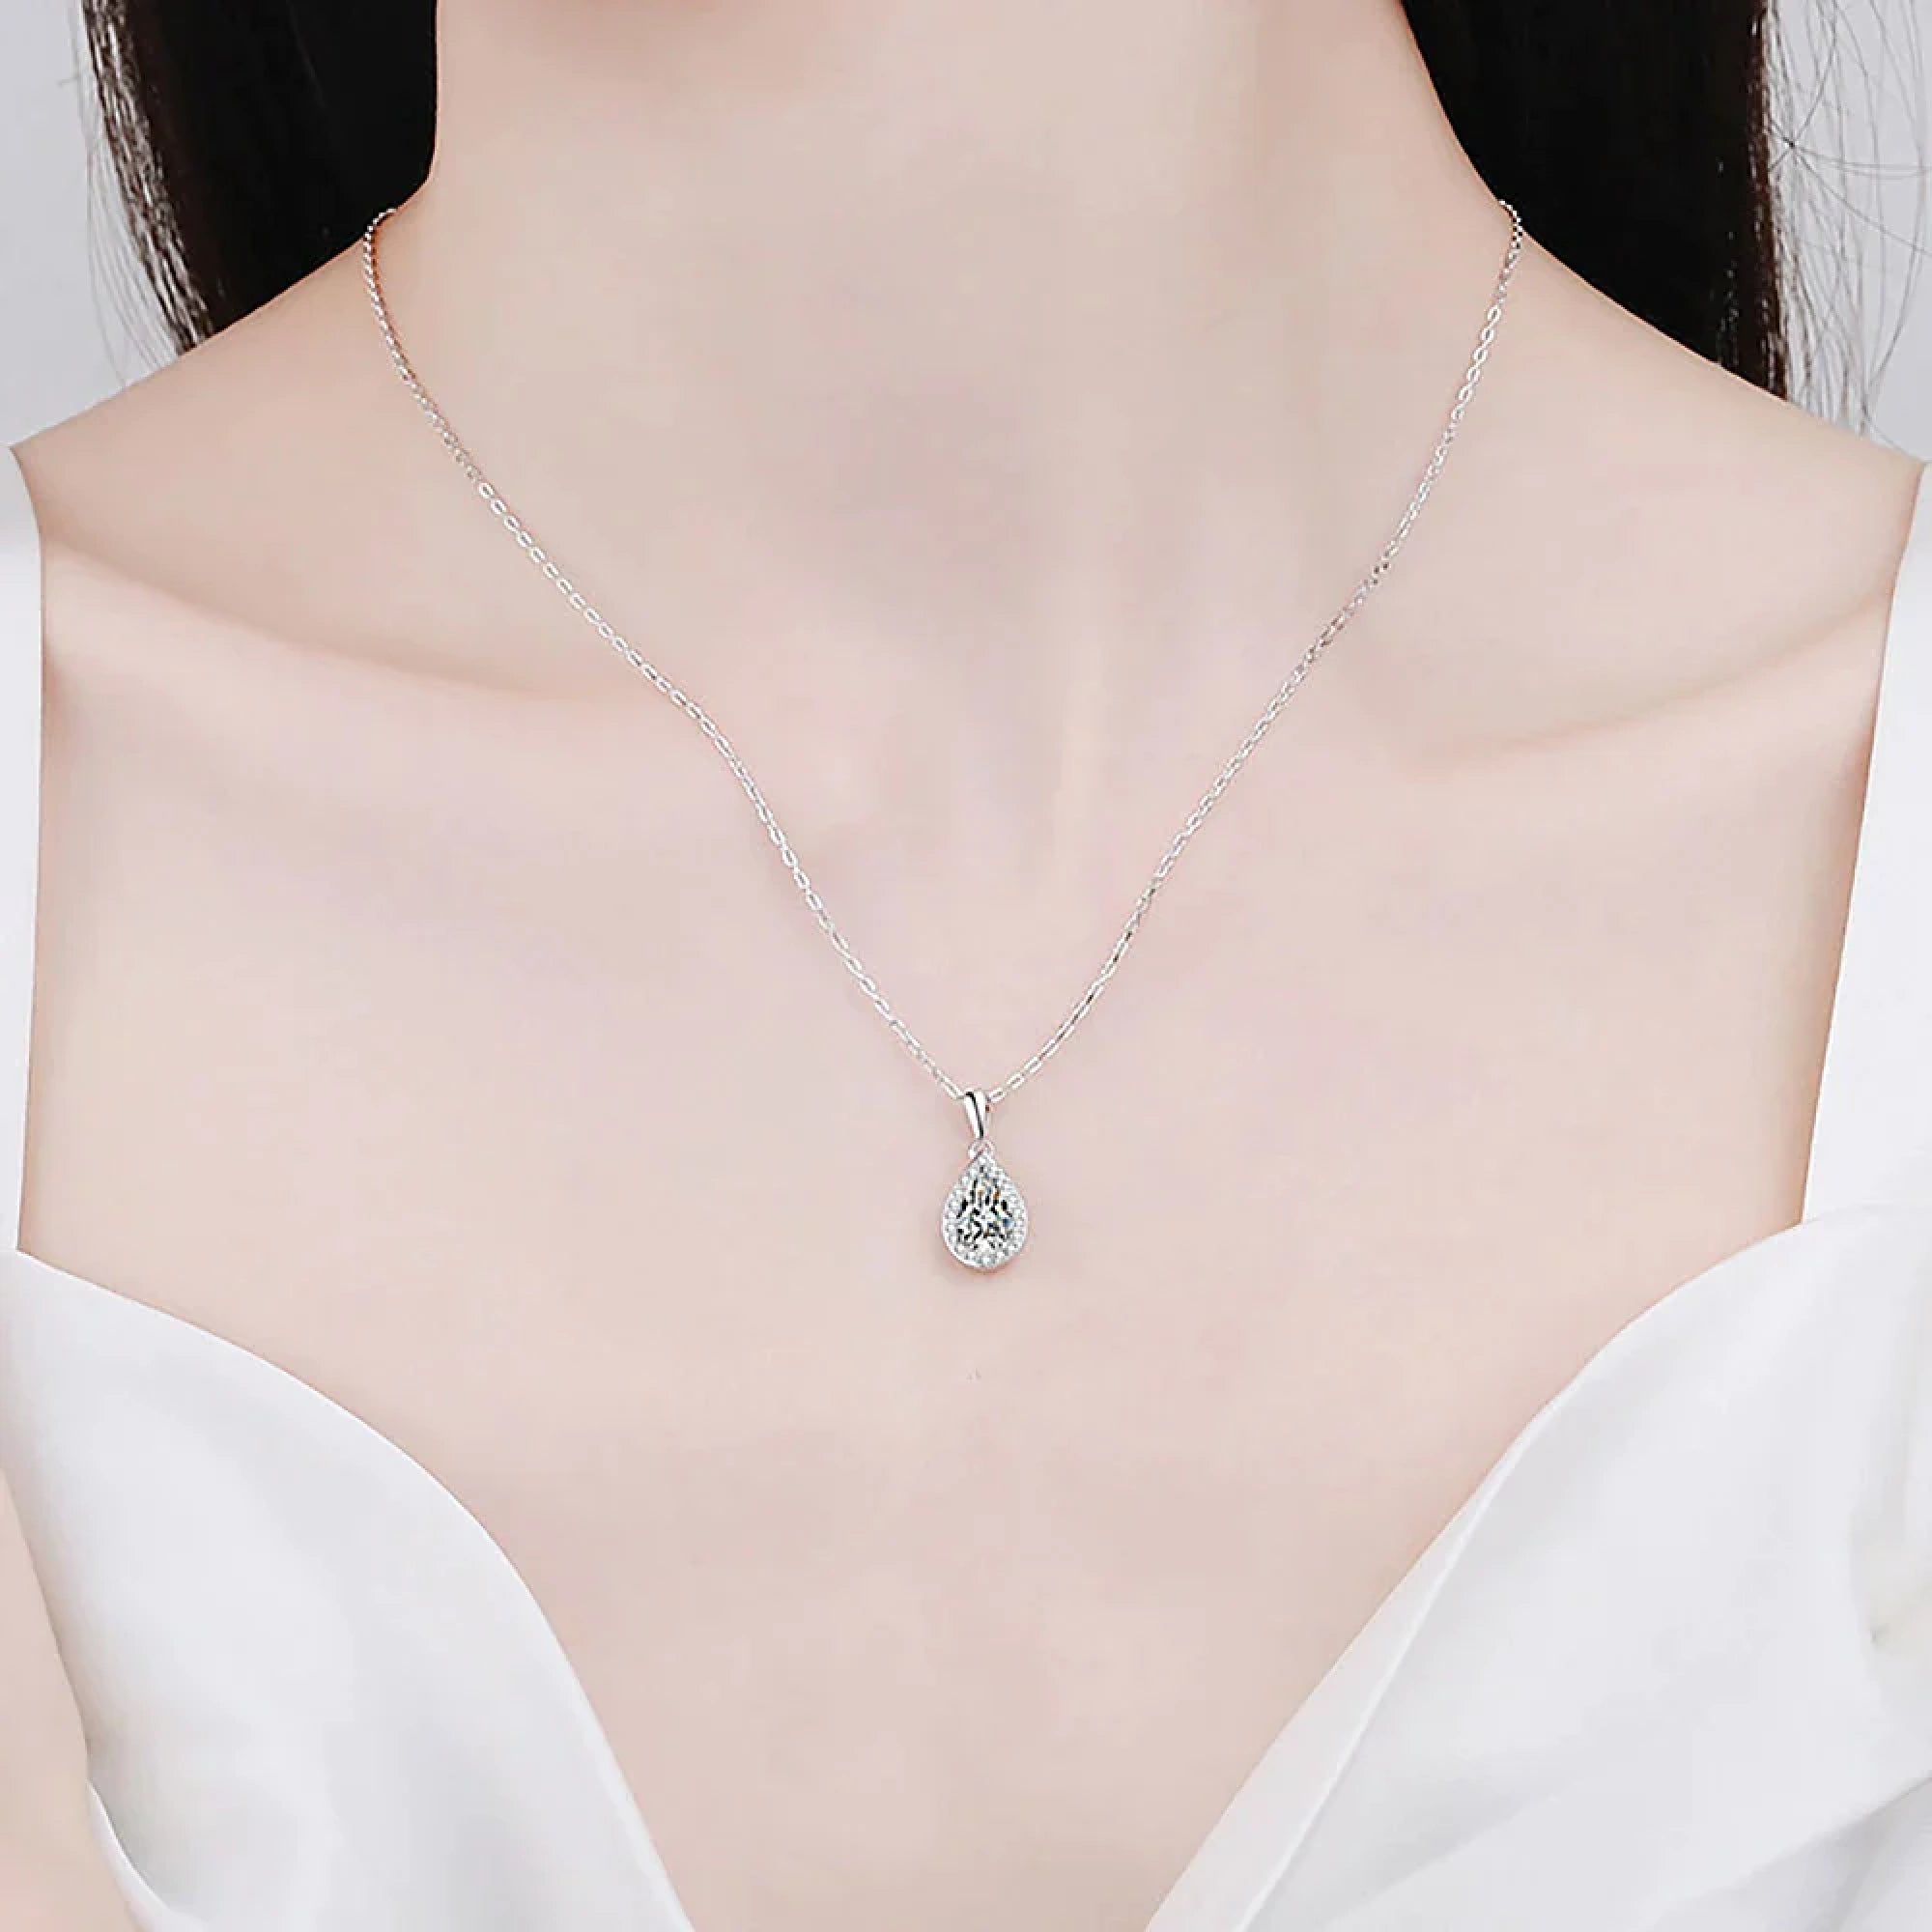 Pear Cut Halo Moissanite Diamond Pendant